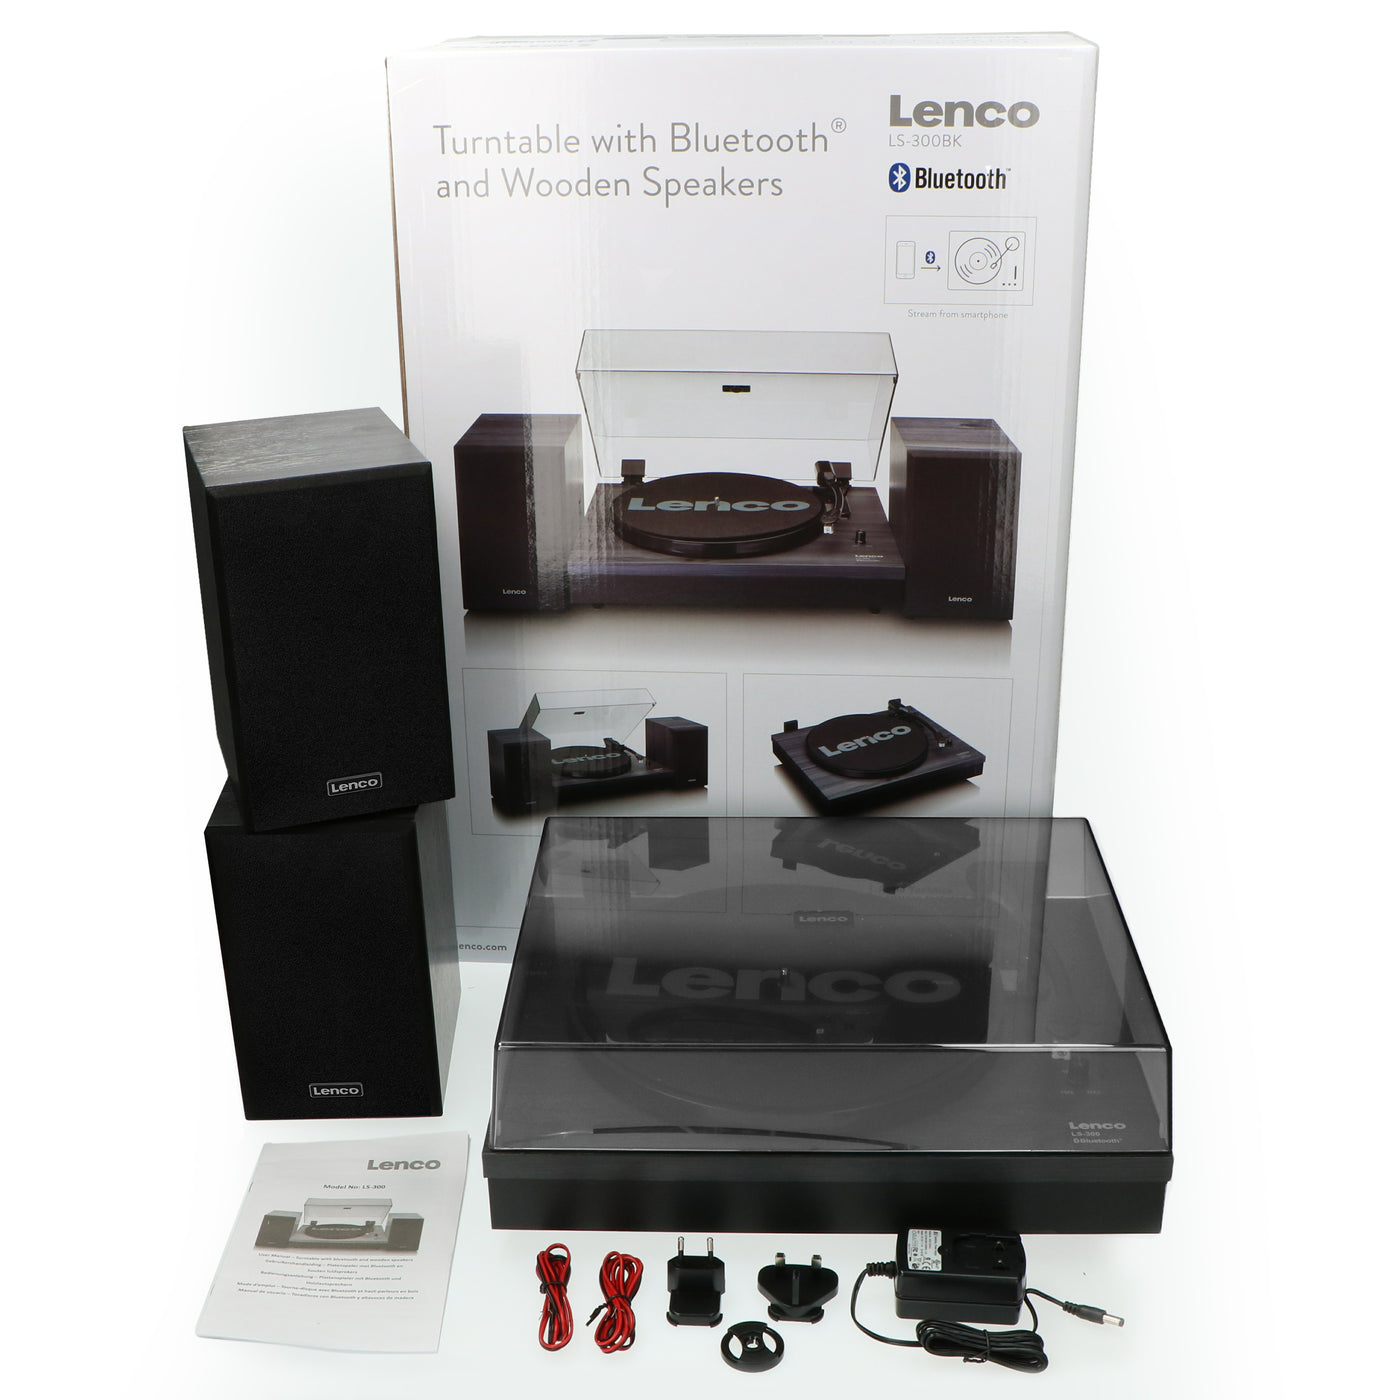 Lenco LS-300BK kaufen? Webshop - Lenco.de im | offiziellen Webshop Offizieller – Jetzt Lenco